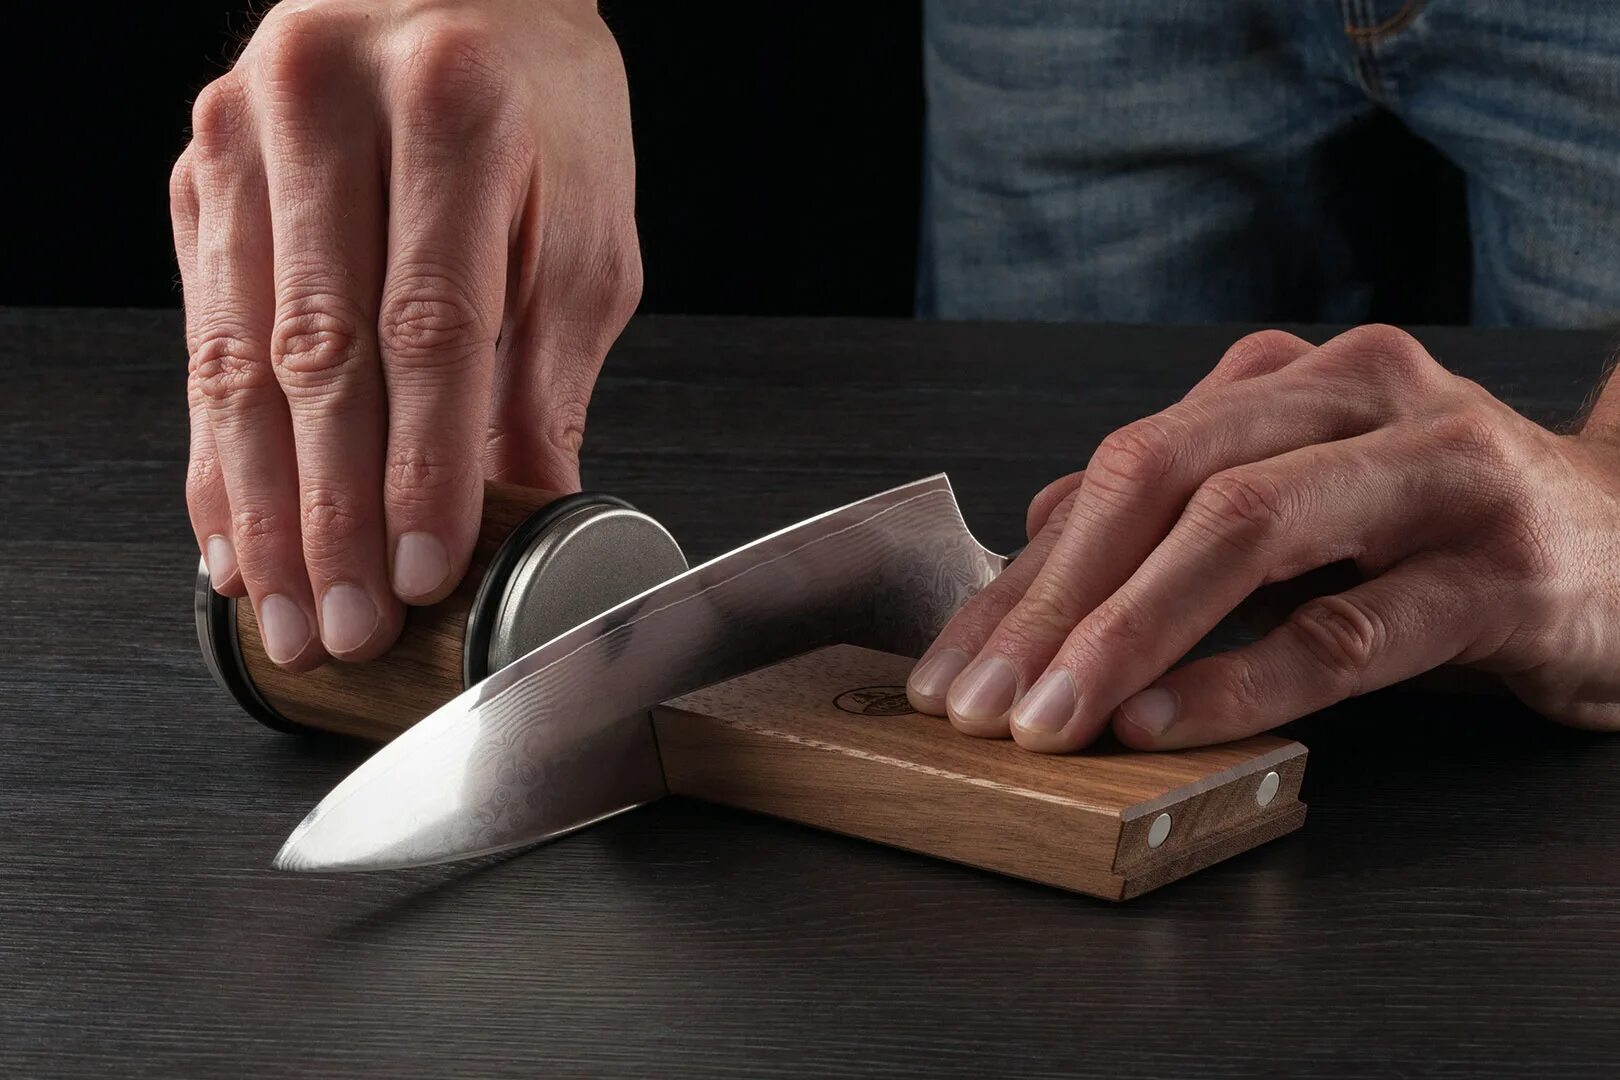 Точилка для ножей Horl 1993. Horl 2 Knife Sharpener. Tumbler Knife Sharpener точилка для ножей. Rolling Knife Sharpener.